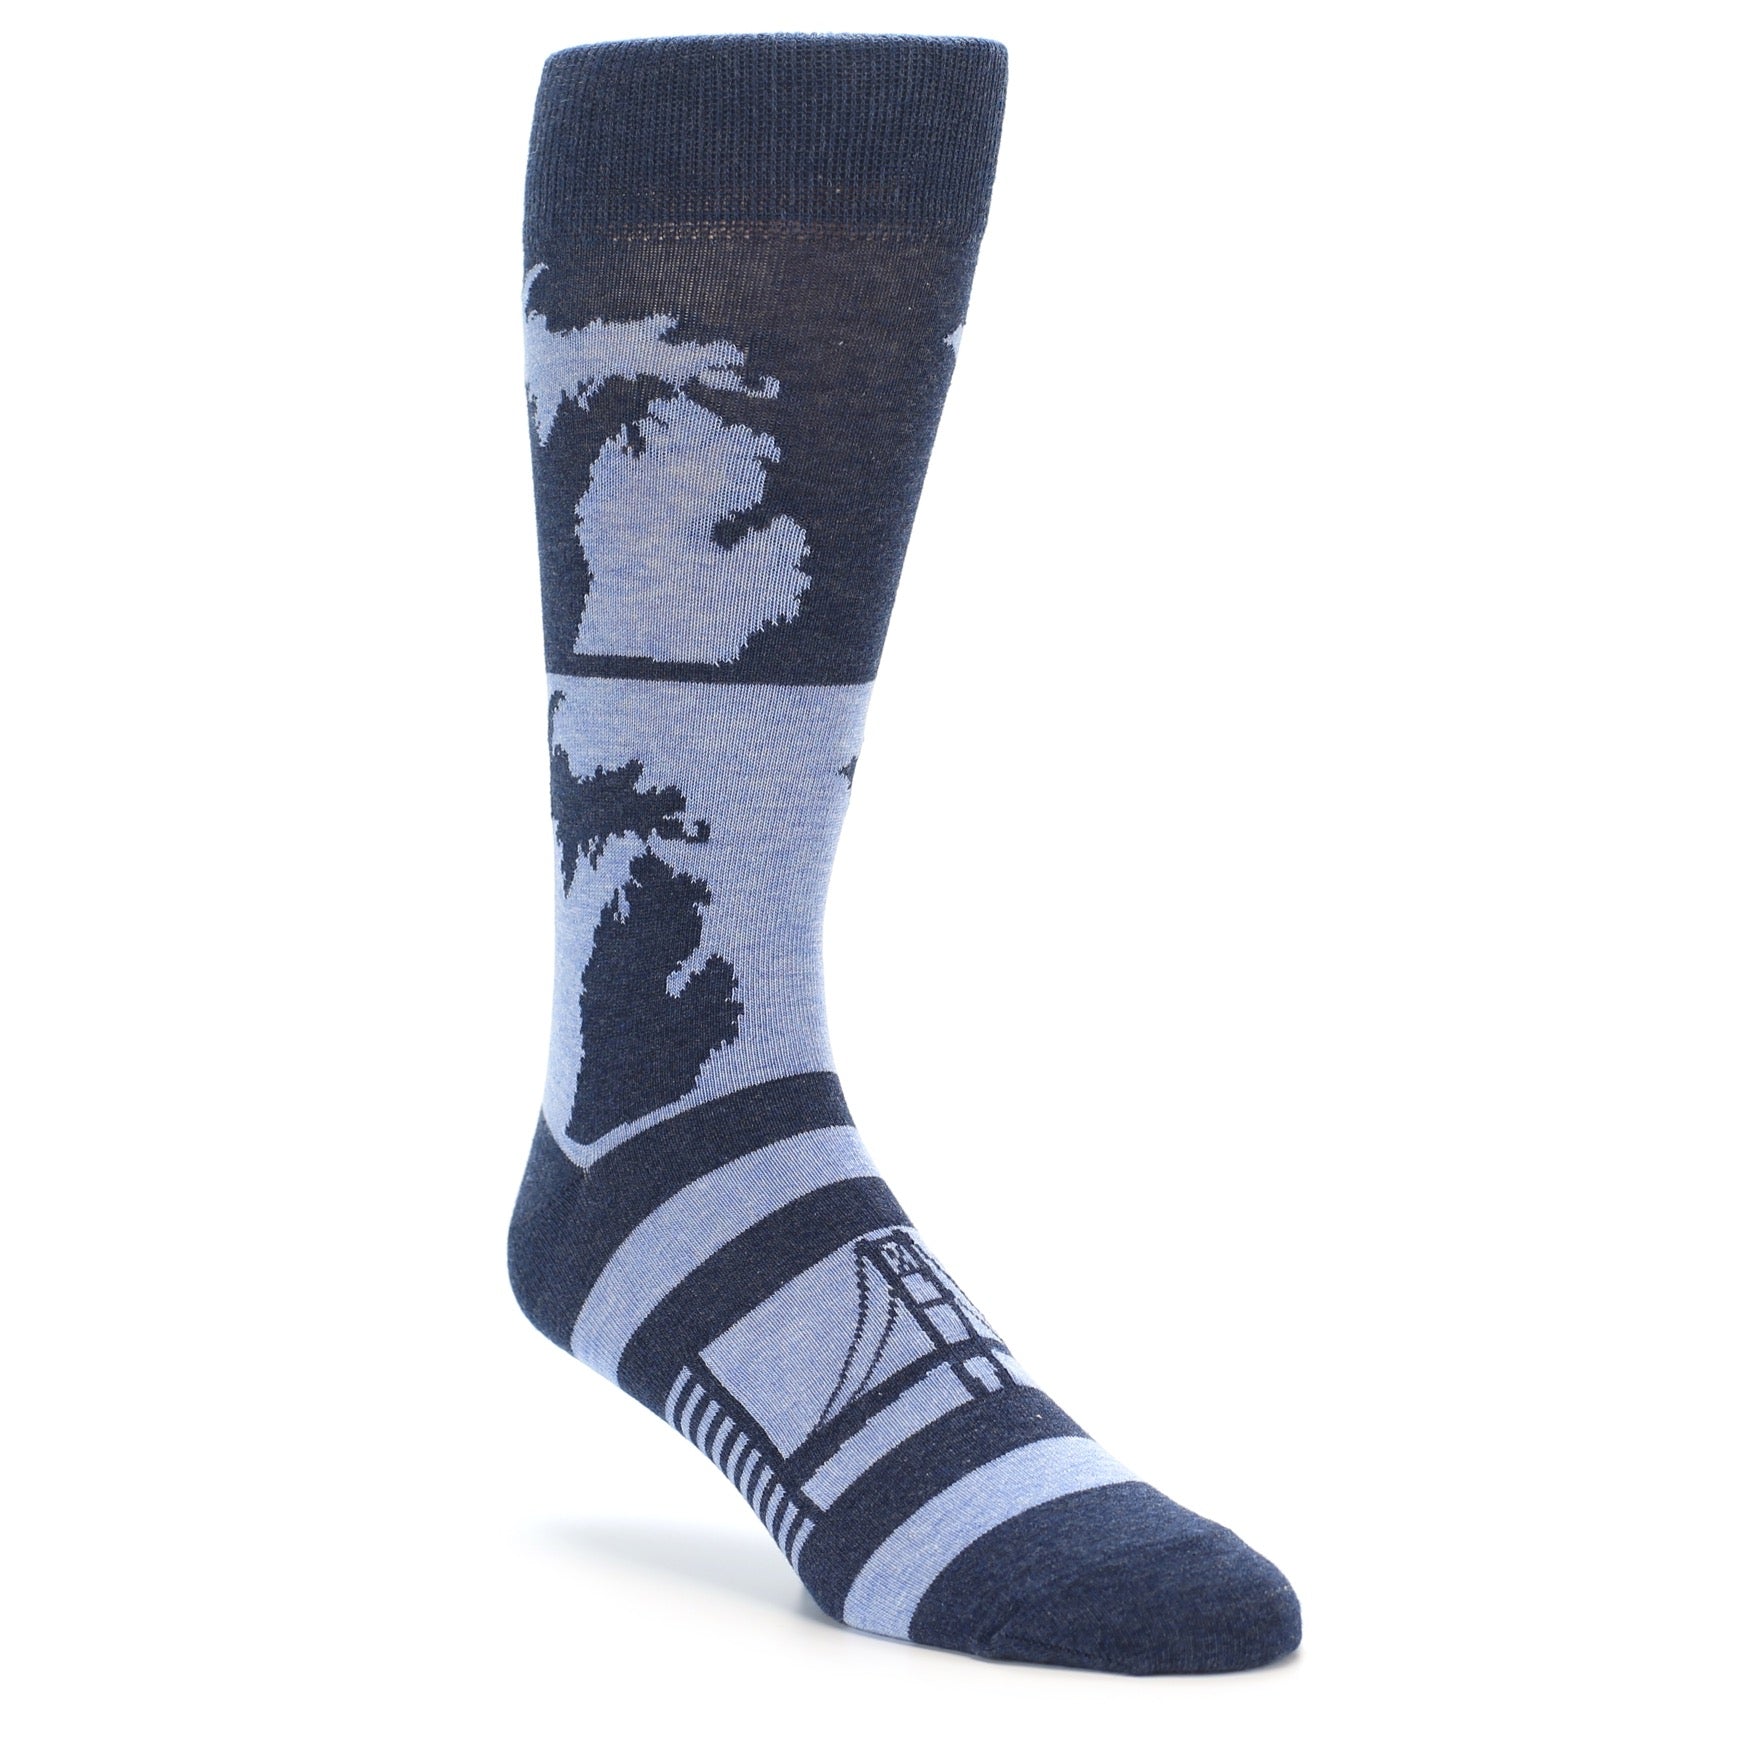 Pure Michigan Inspired Socks for Men